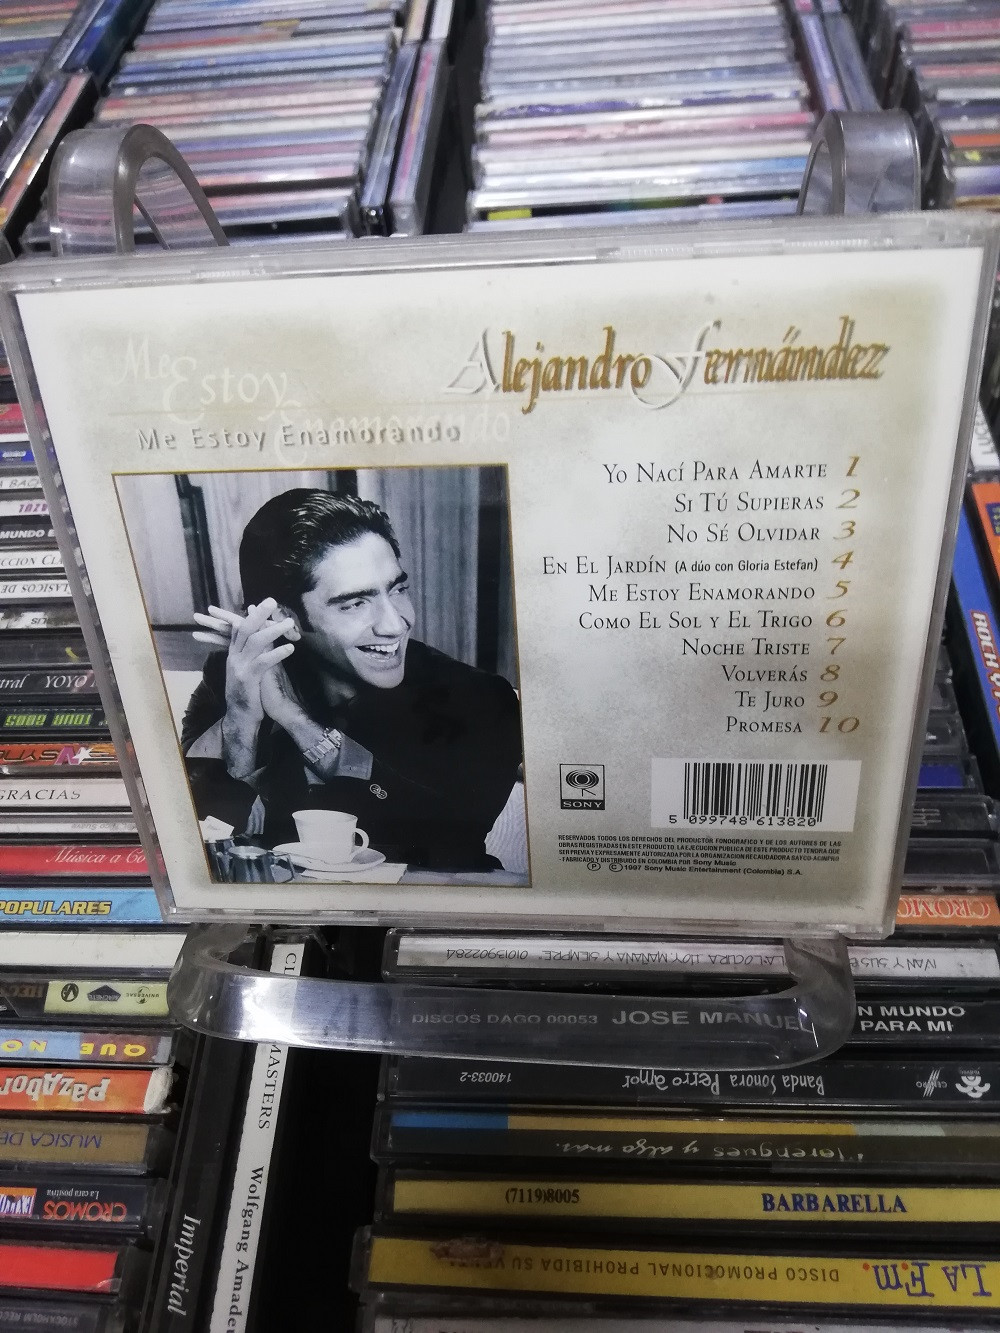 Imagen CD ALEJANDRO FERNANDEZ - ME ESTOY ENAMORANDO 2